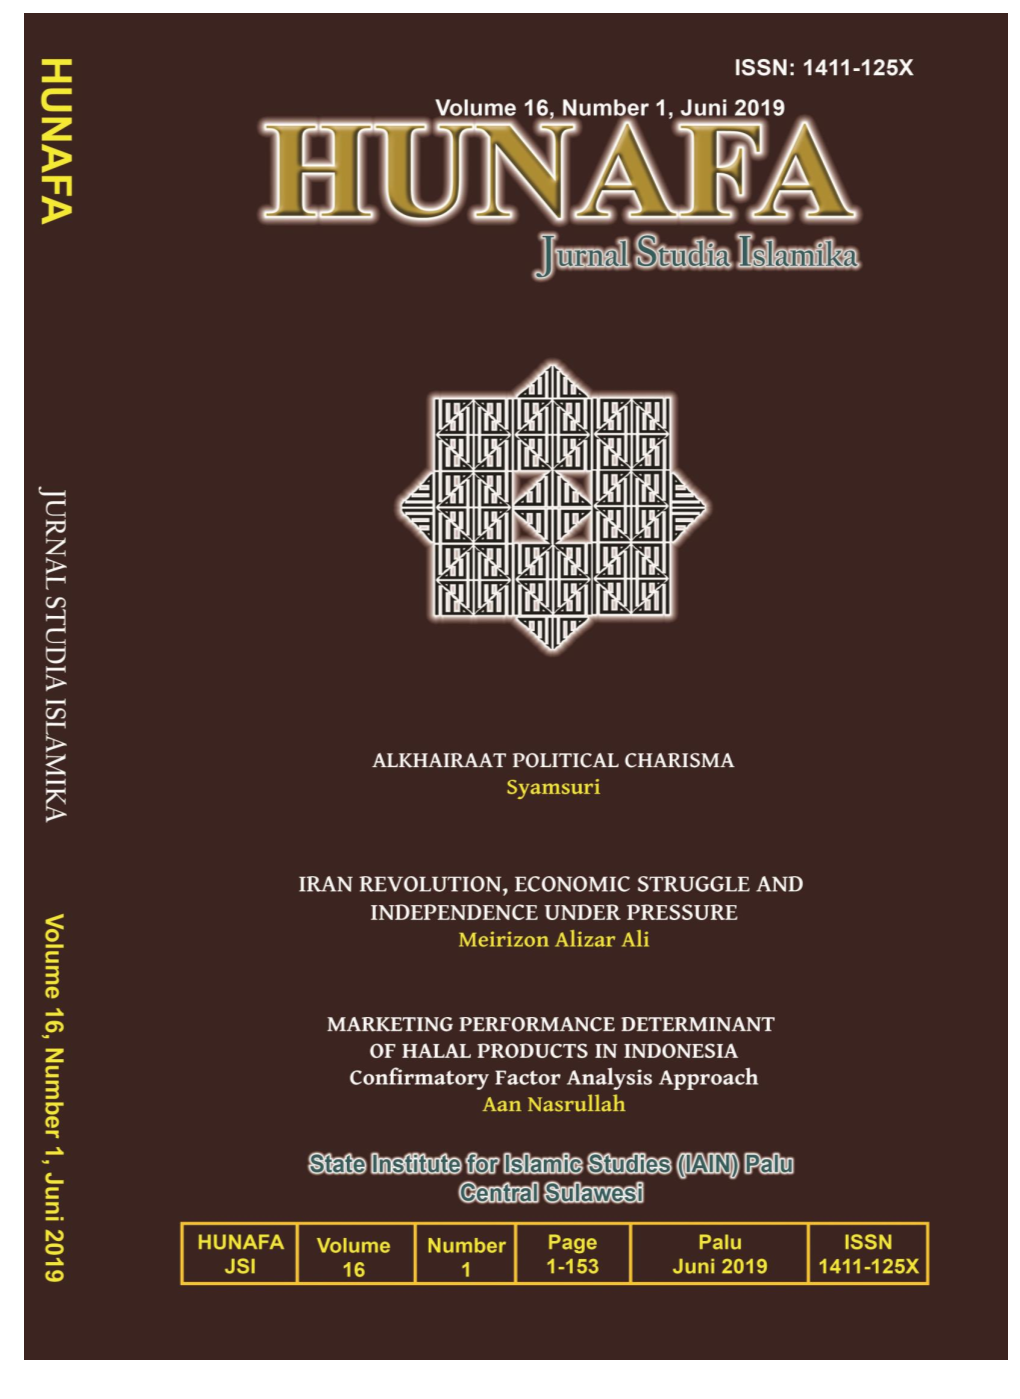 HUNAFA: Jurnal Studia Islamika